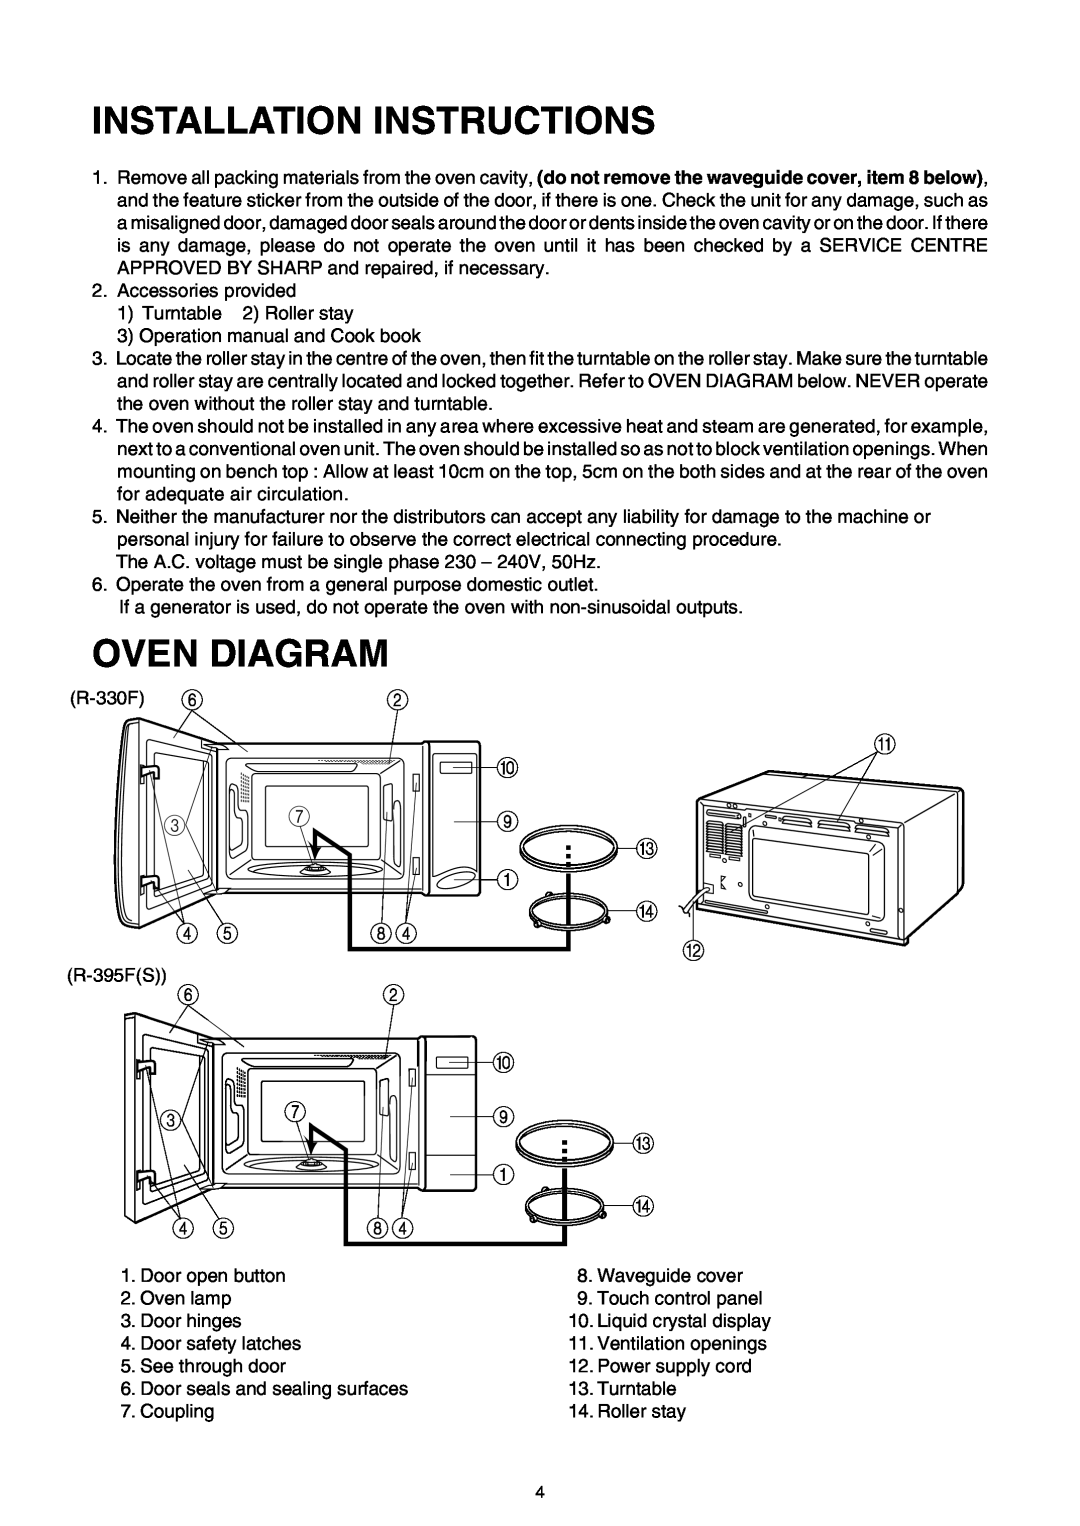 Sharp R-395F(S), R-330F J operation manual Installation Instructions, Oven Diagram, A C D B 